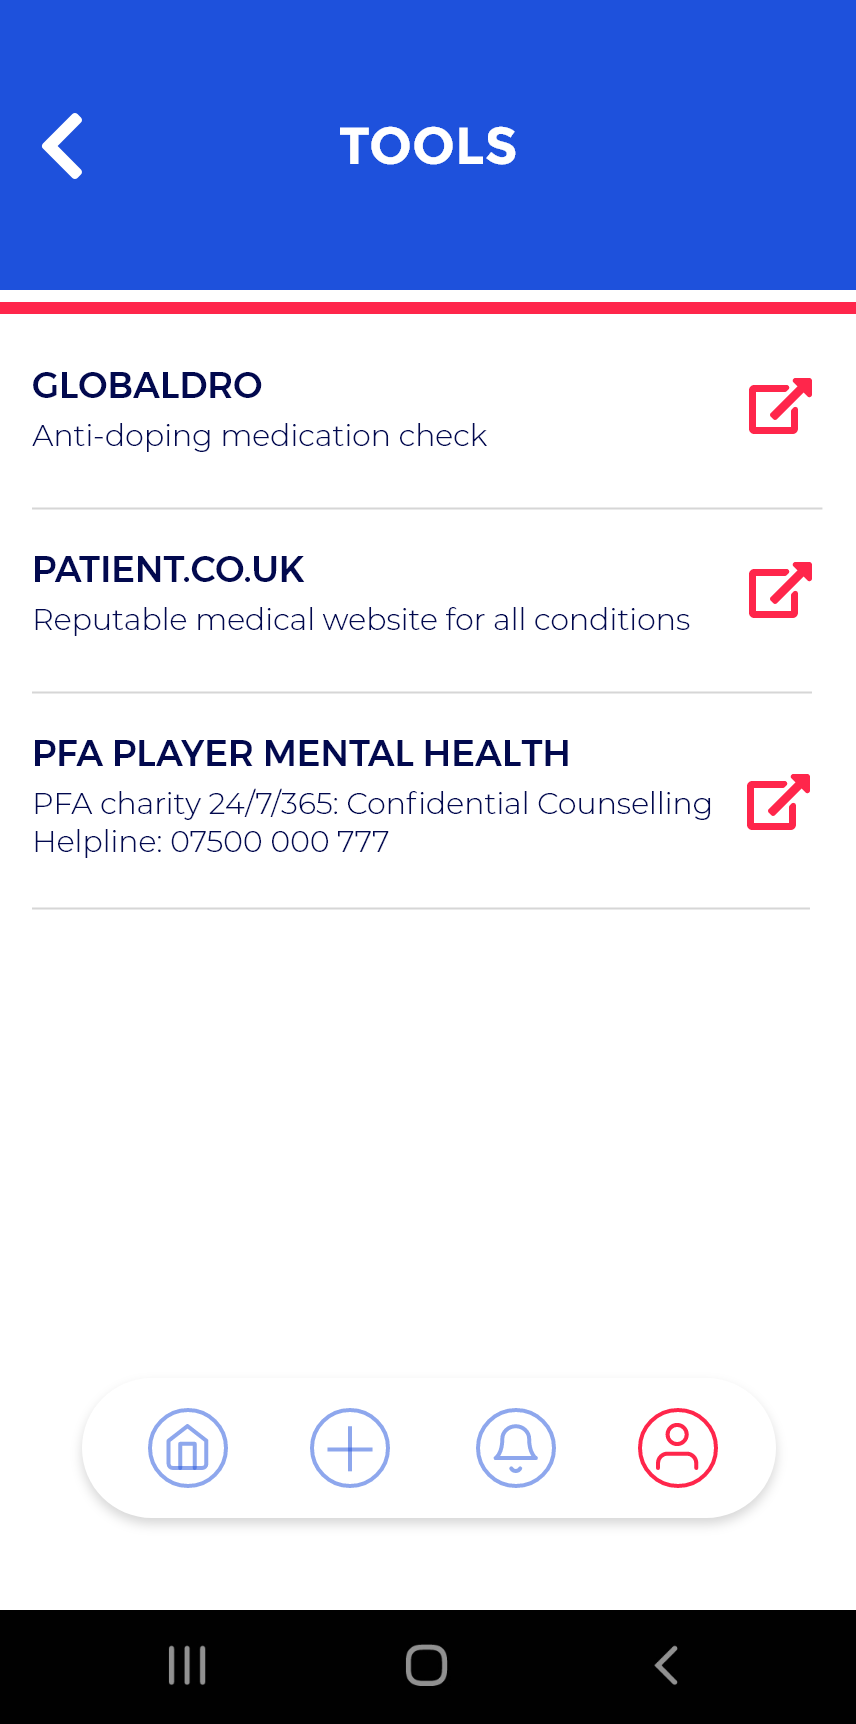 Screenshot of AB3 Medical app tools section